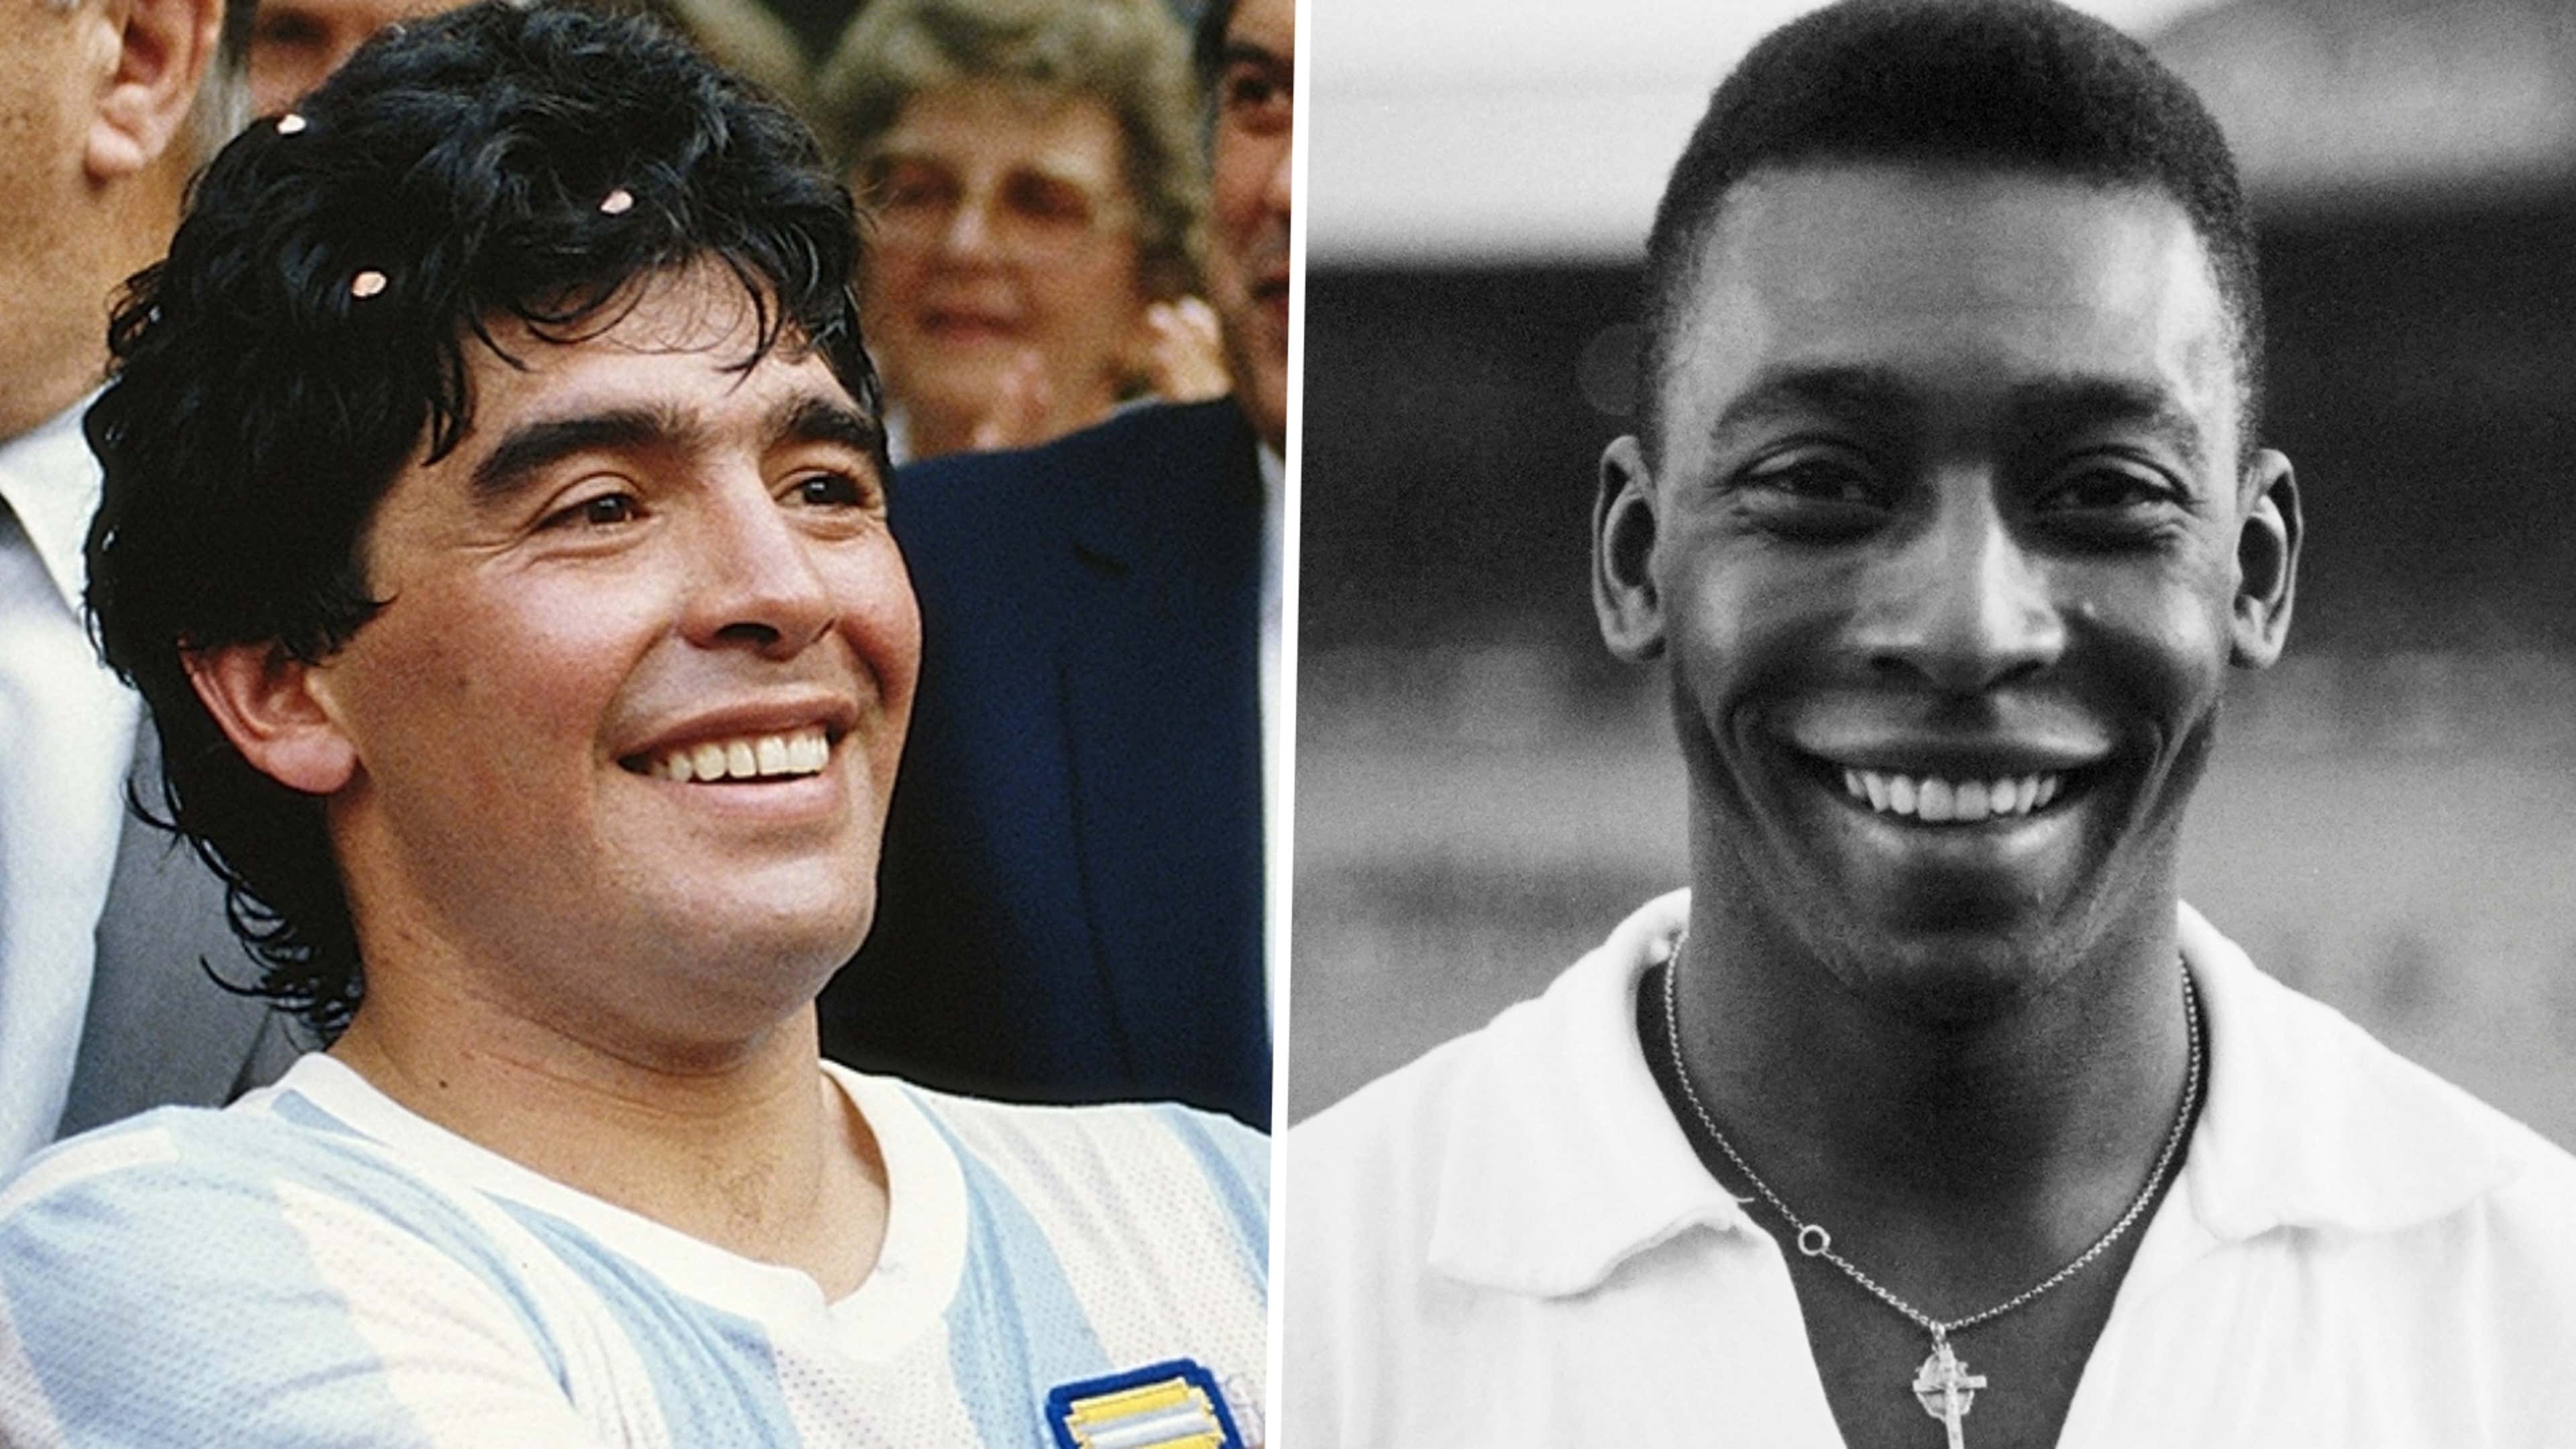 Maradona wishes Pele a speedy recovery - World Soccer Talk